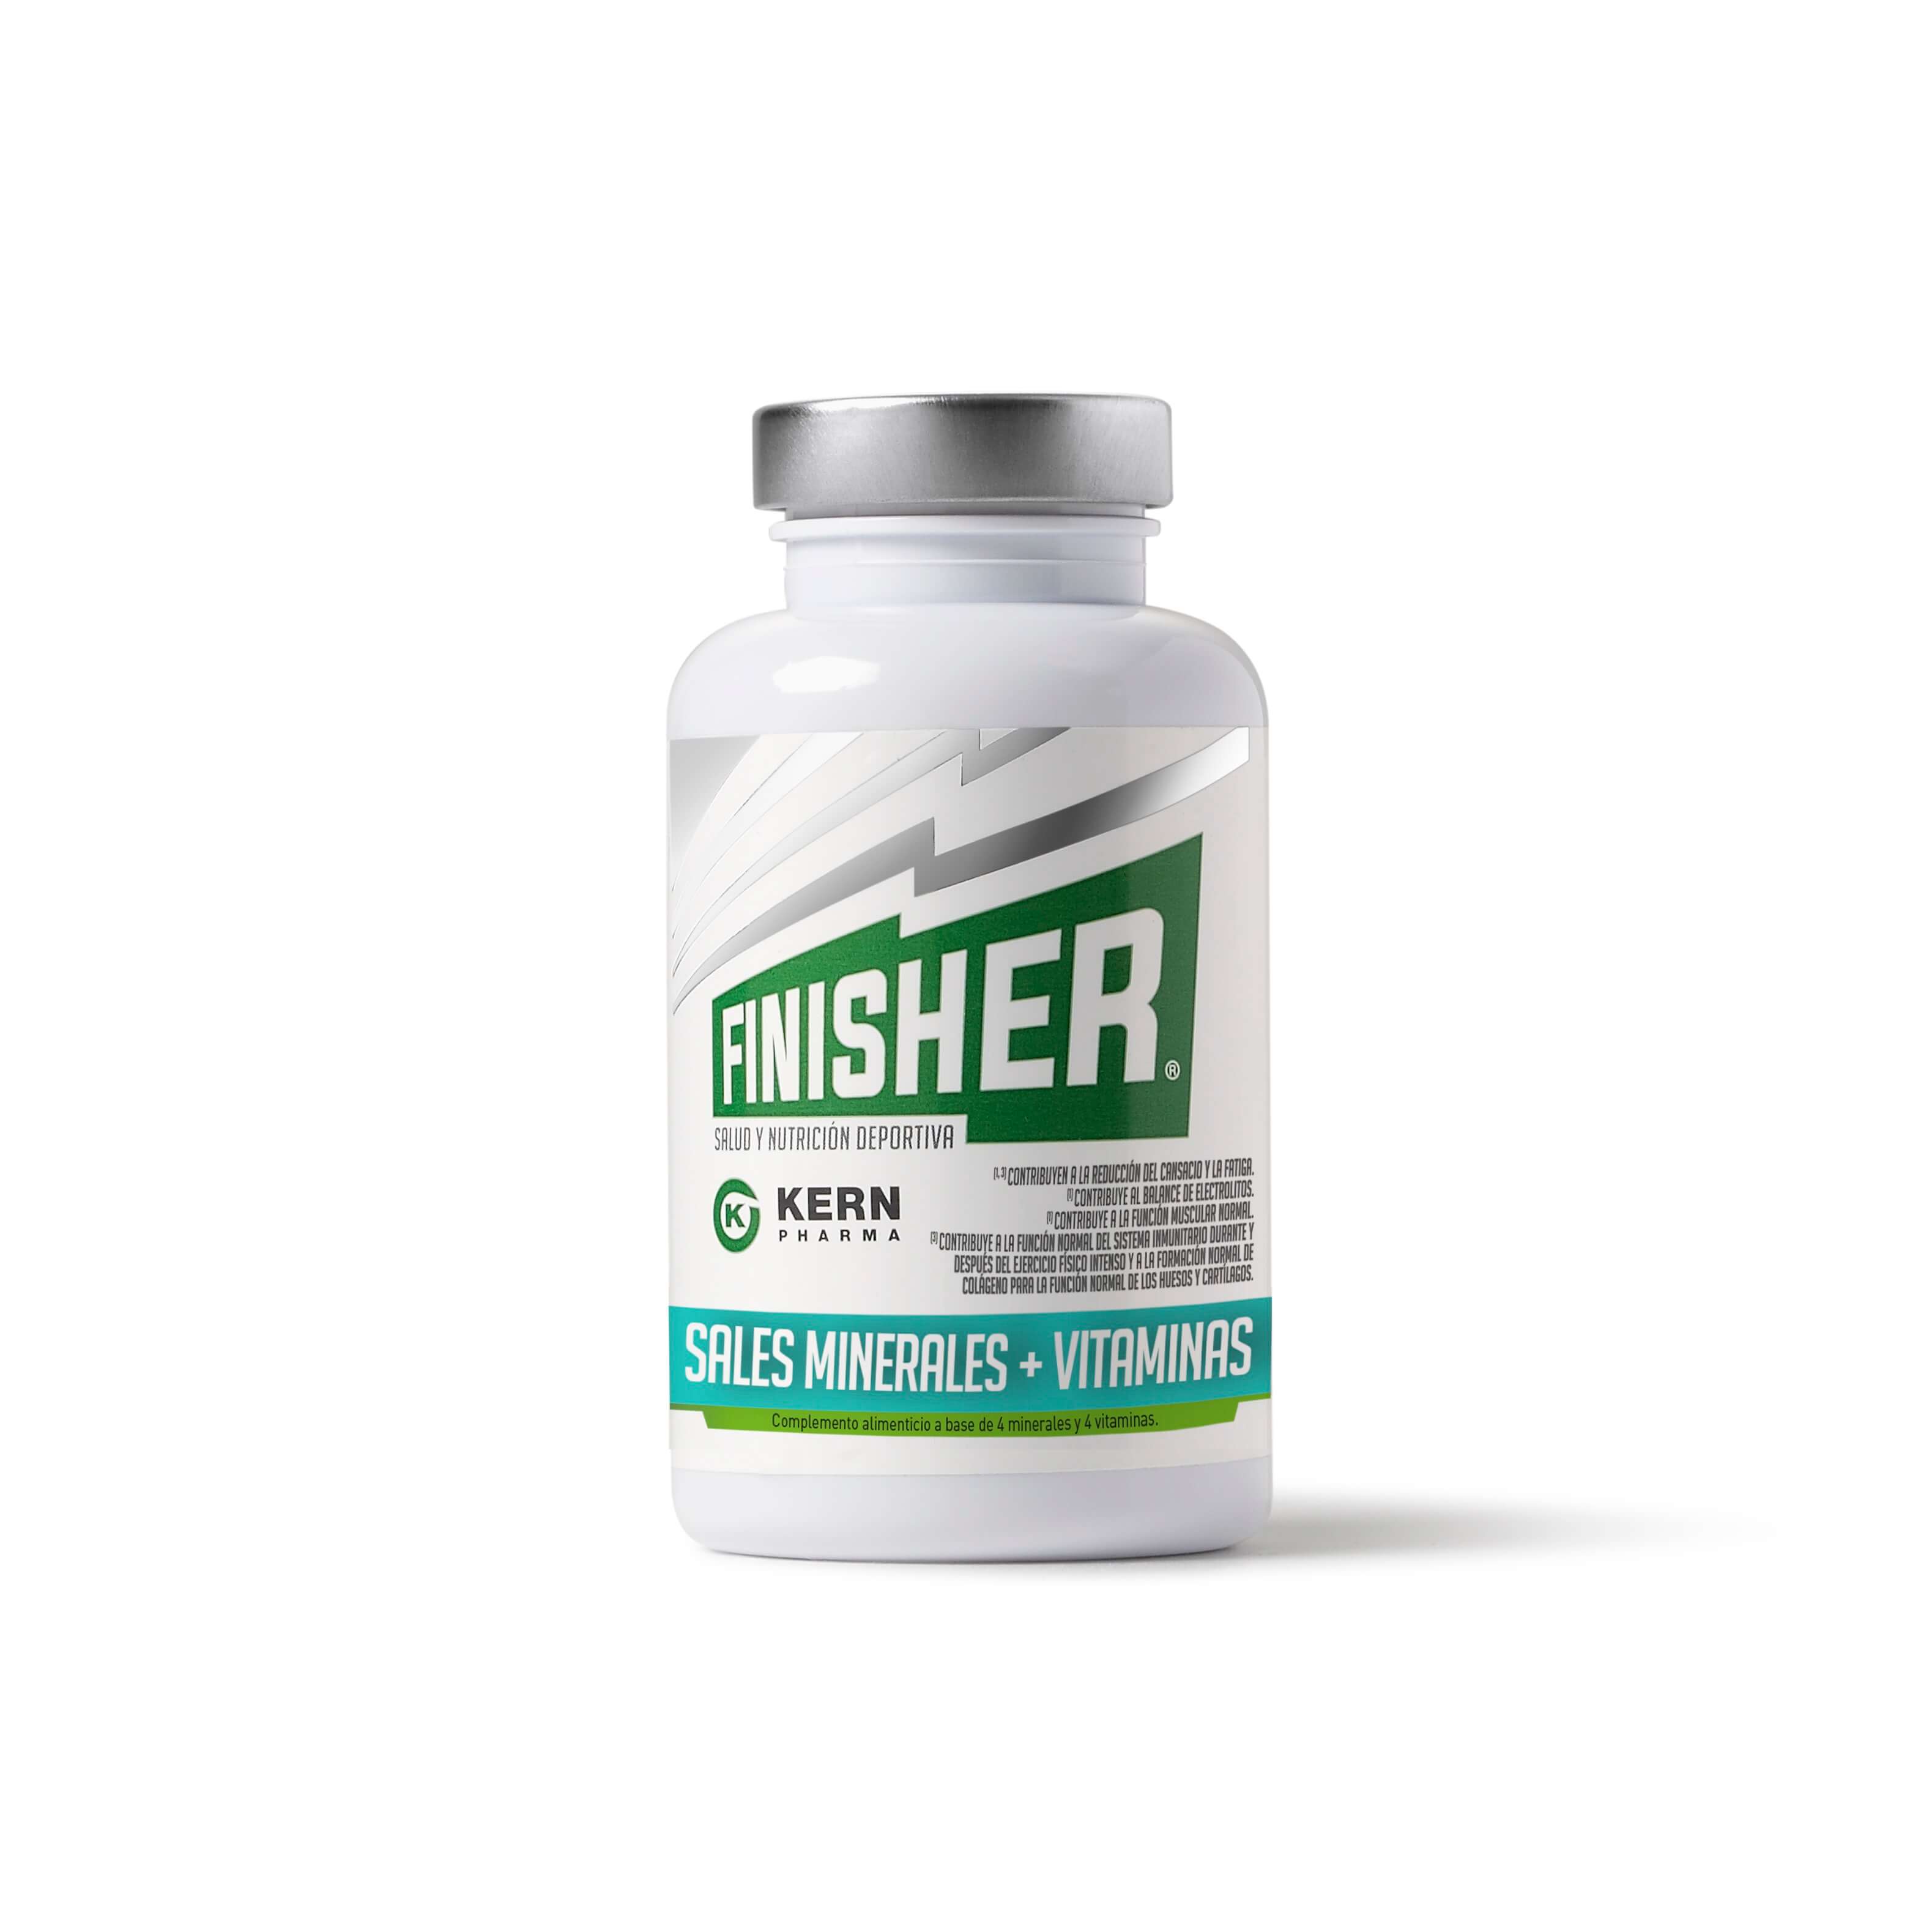 Finisher® Sales Minerales + Vitaminas de Kern Pharma